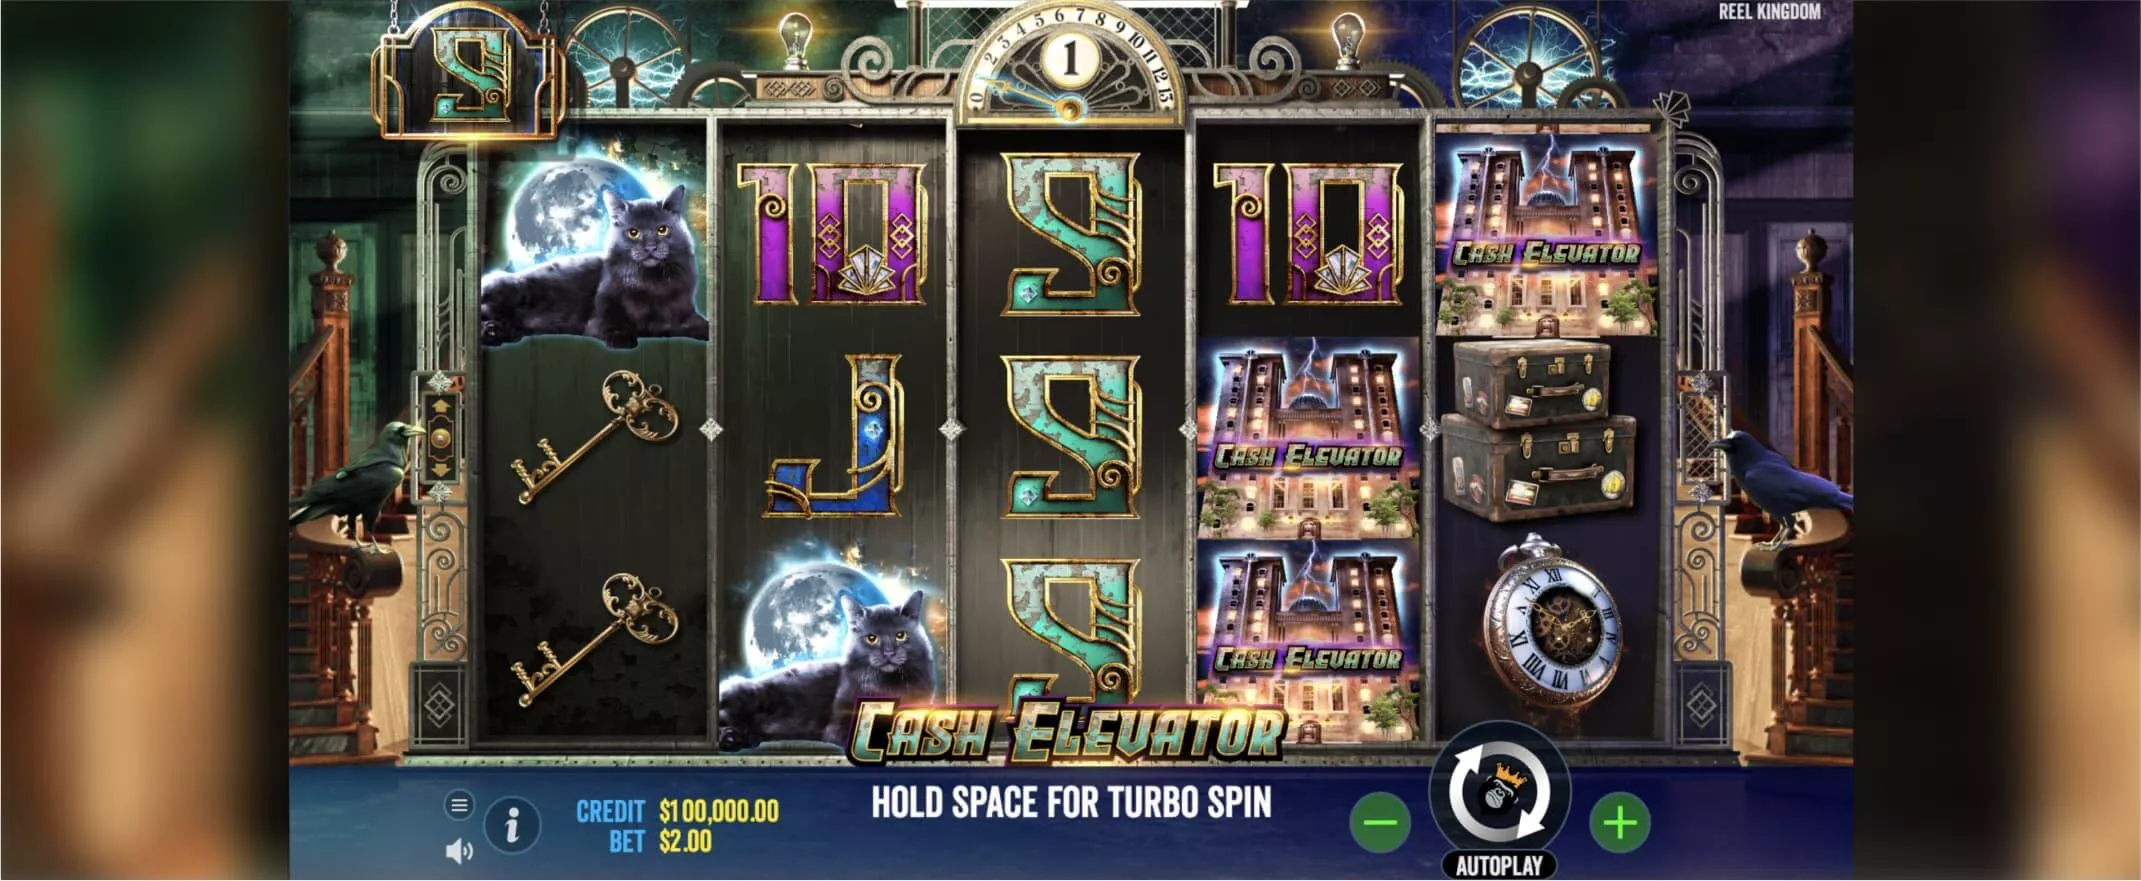 Cash Elevator slot screenshot of the reels